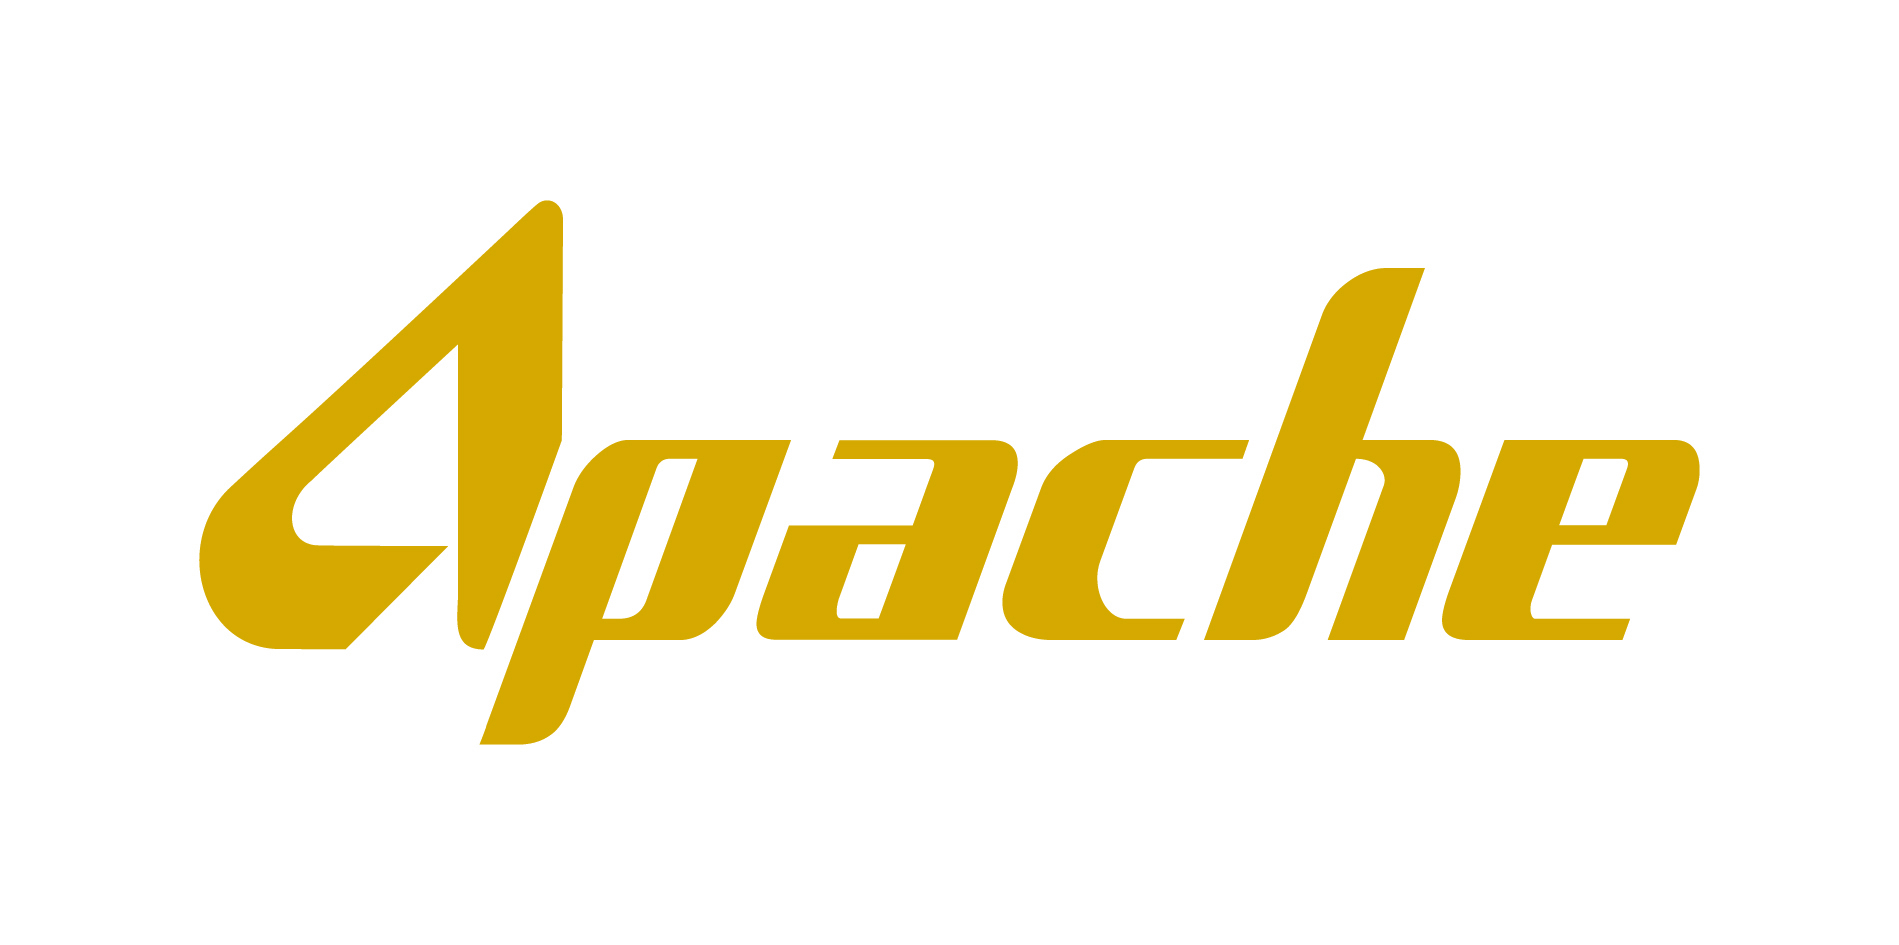 Apache news